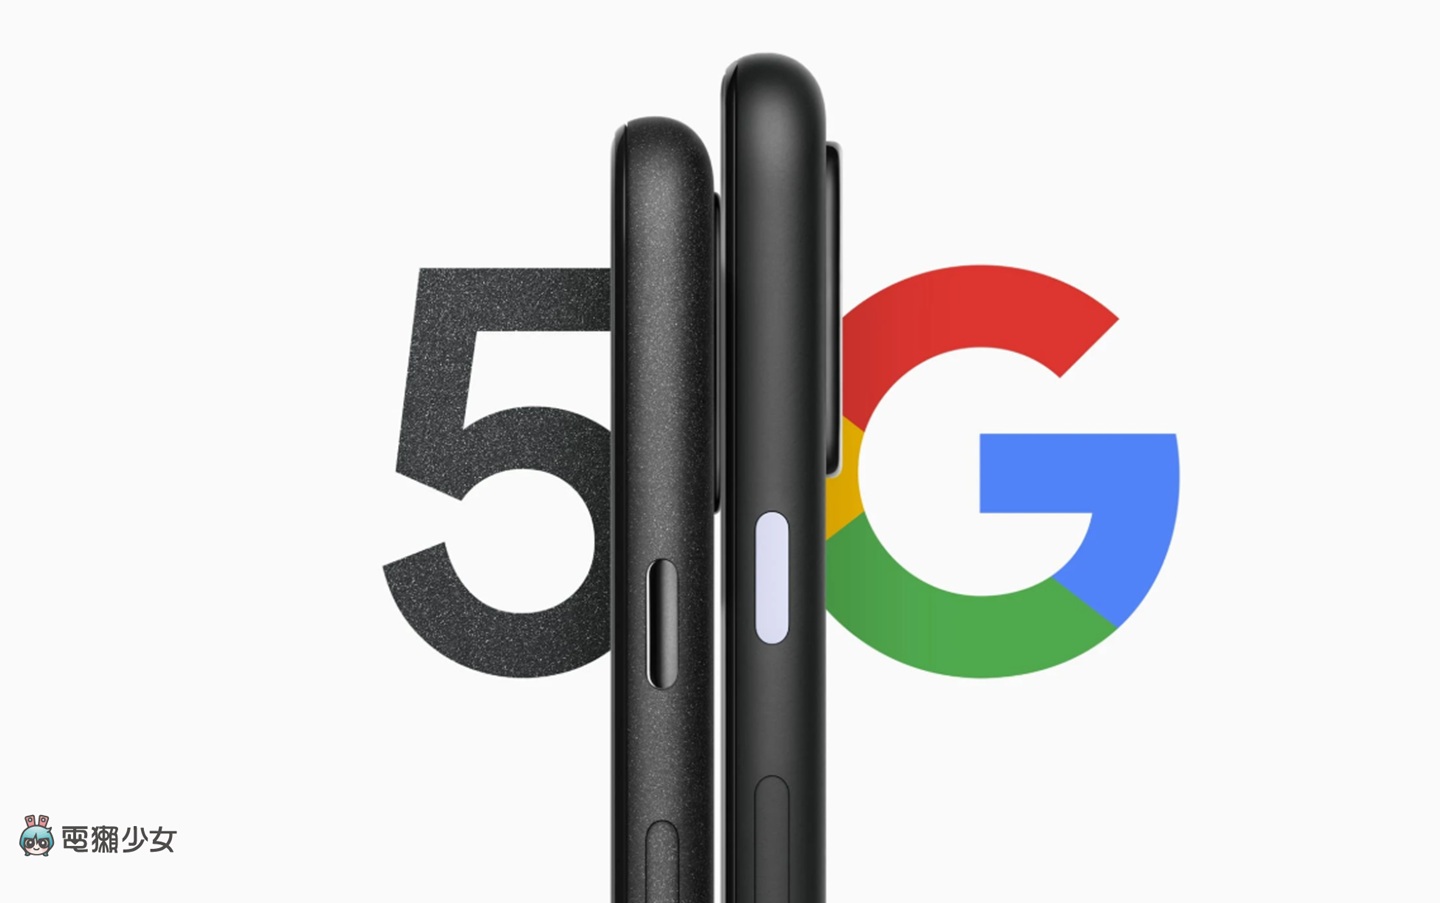 Google Pixel 4a 真的來啦！售價台幣 11,990 元！搭載高通 S730 處理器、3140 mAh 電池、保留實體指紋辨識跟耳機孔